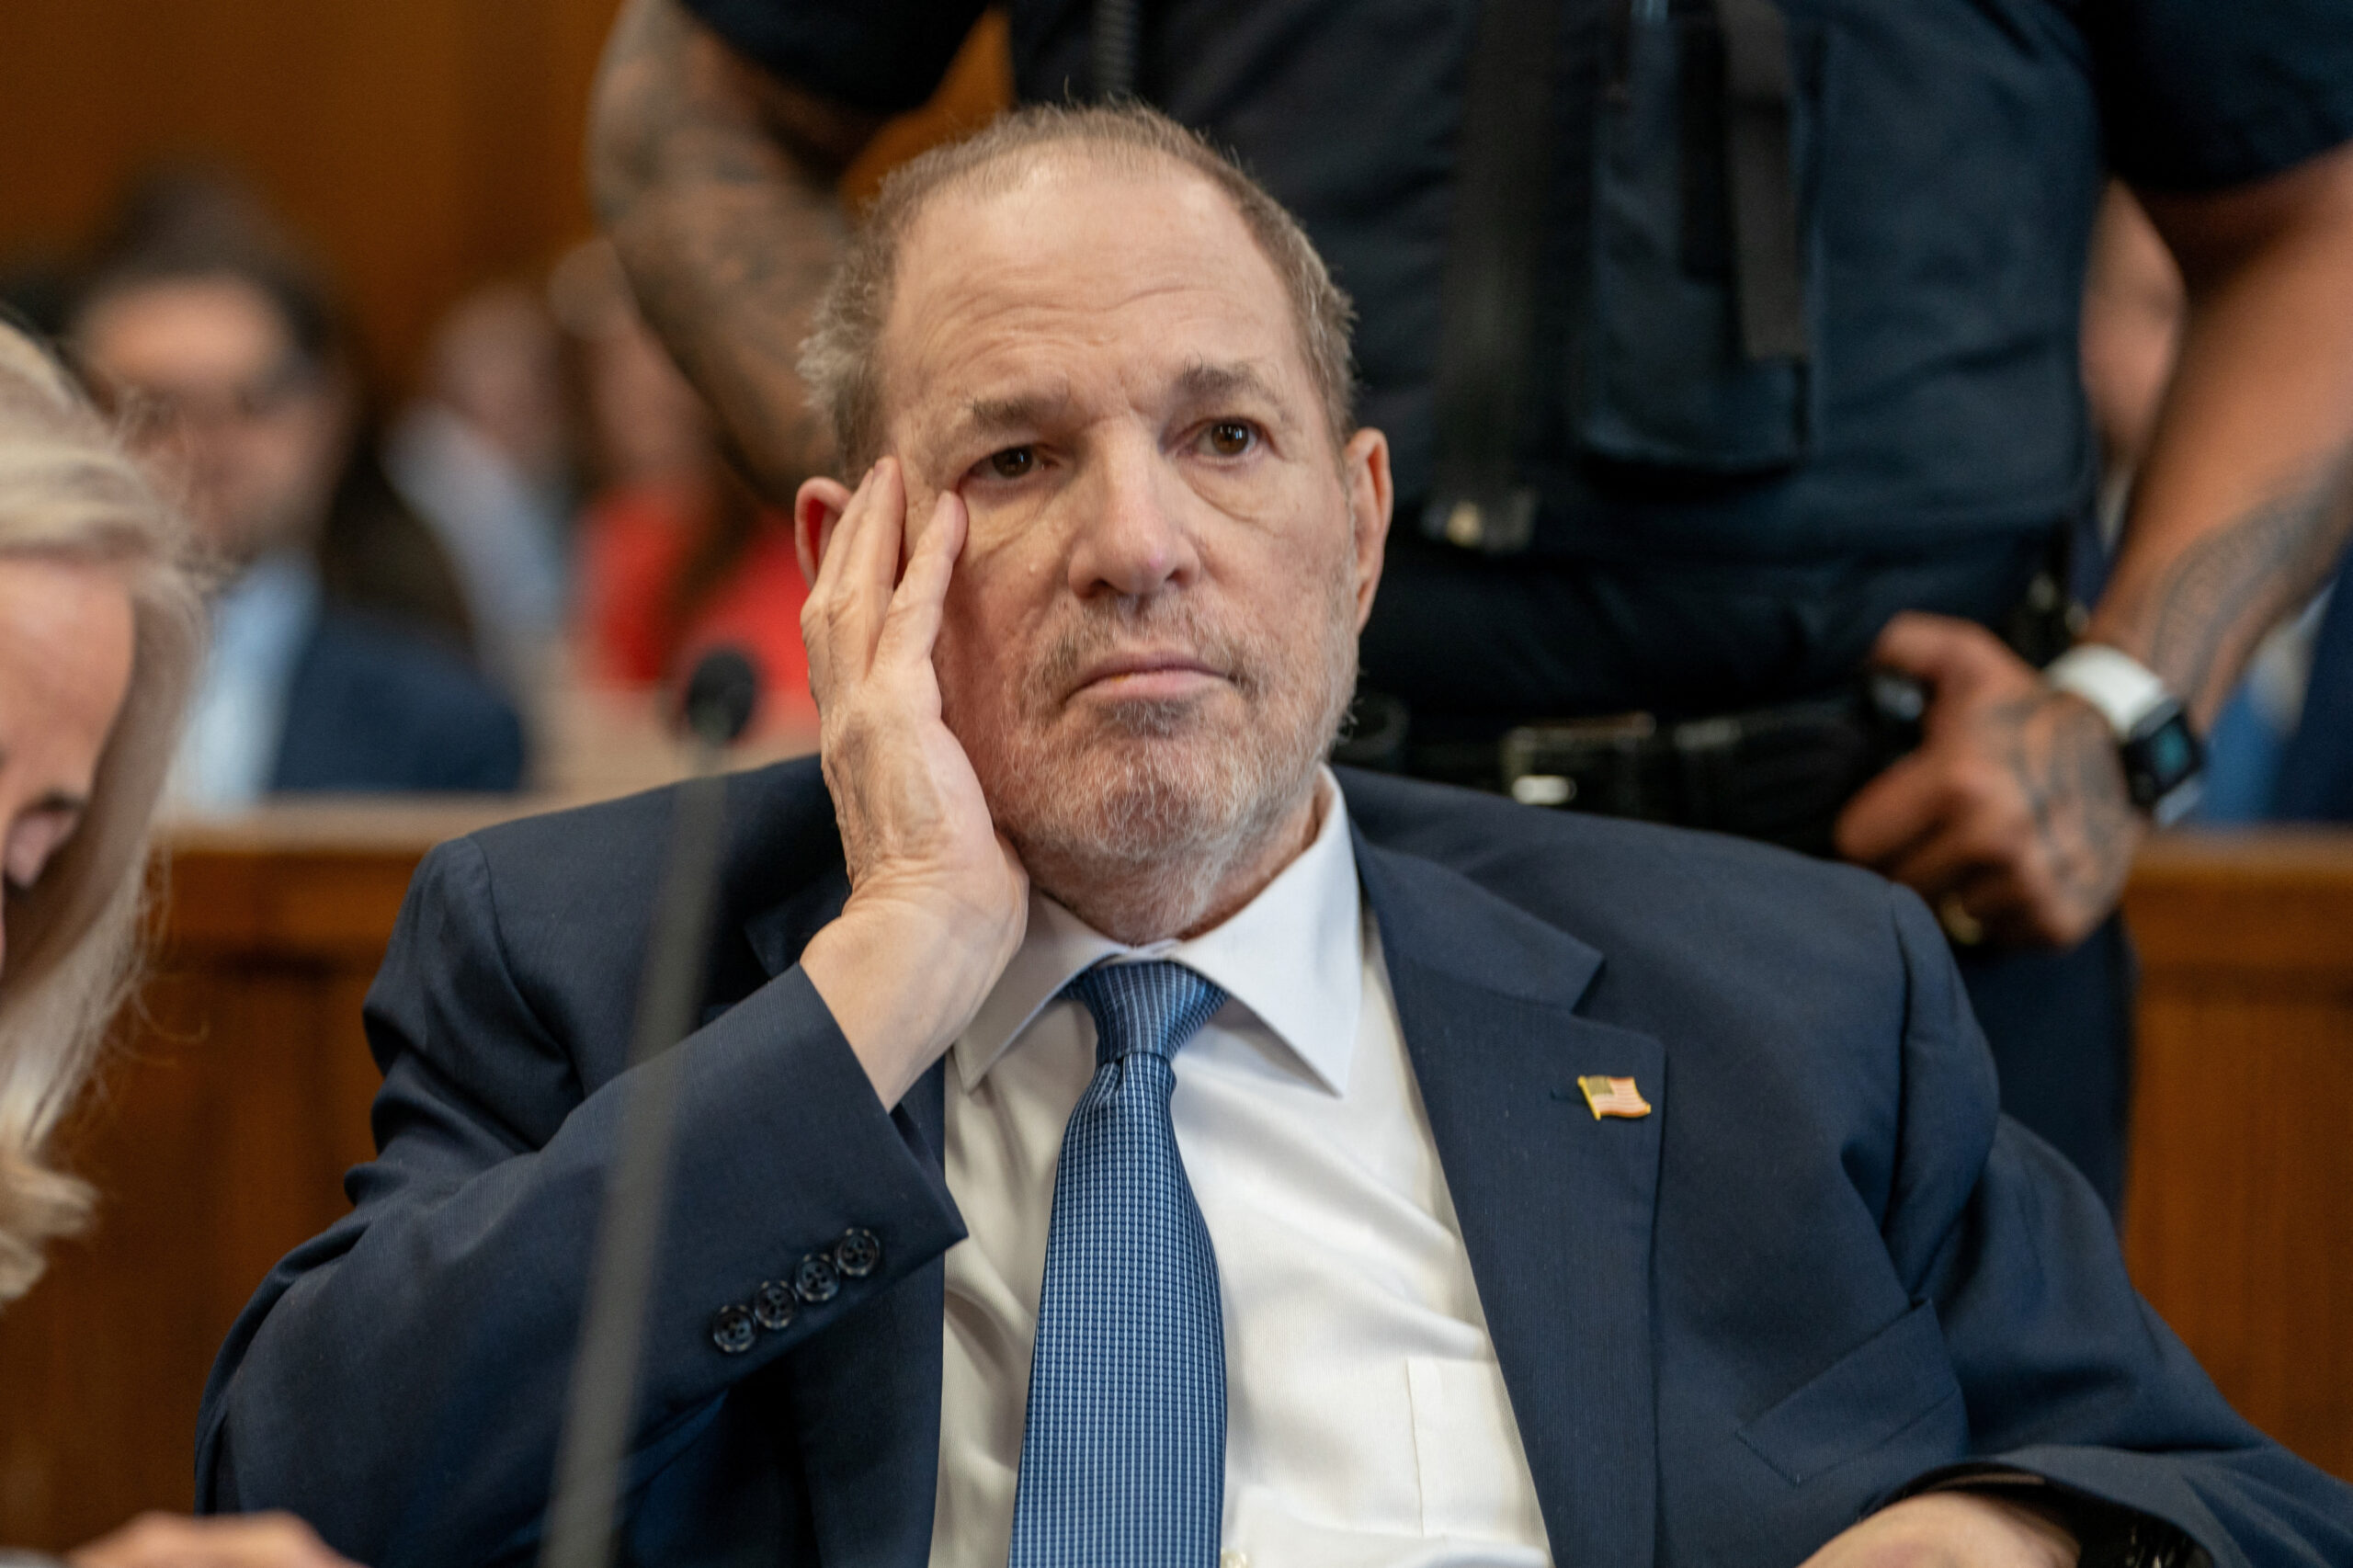 Harvey Weinstein, Former Hollywood Mogul, To Be Retried For Rape In New York